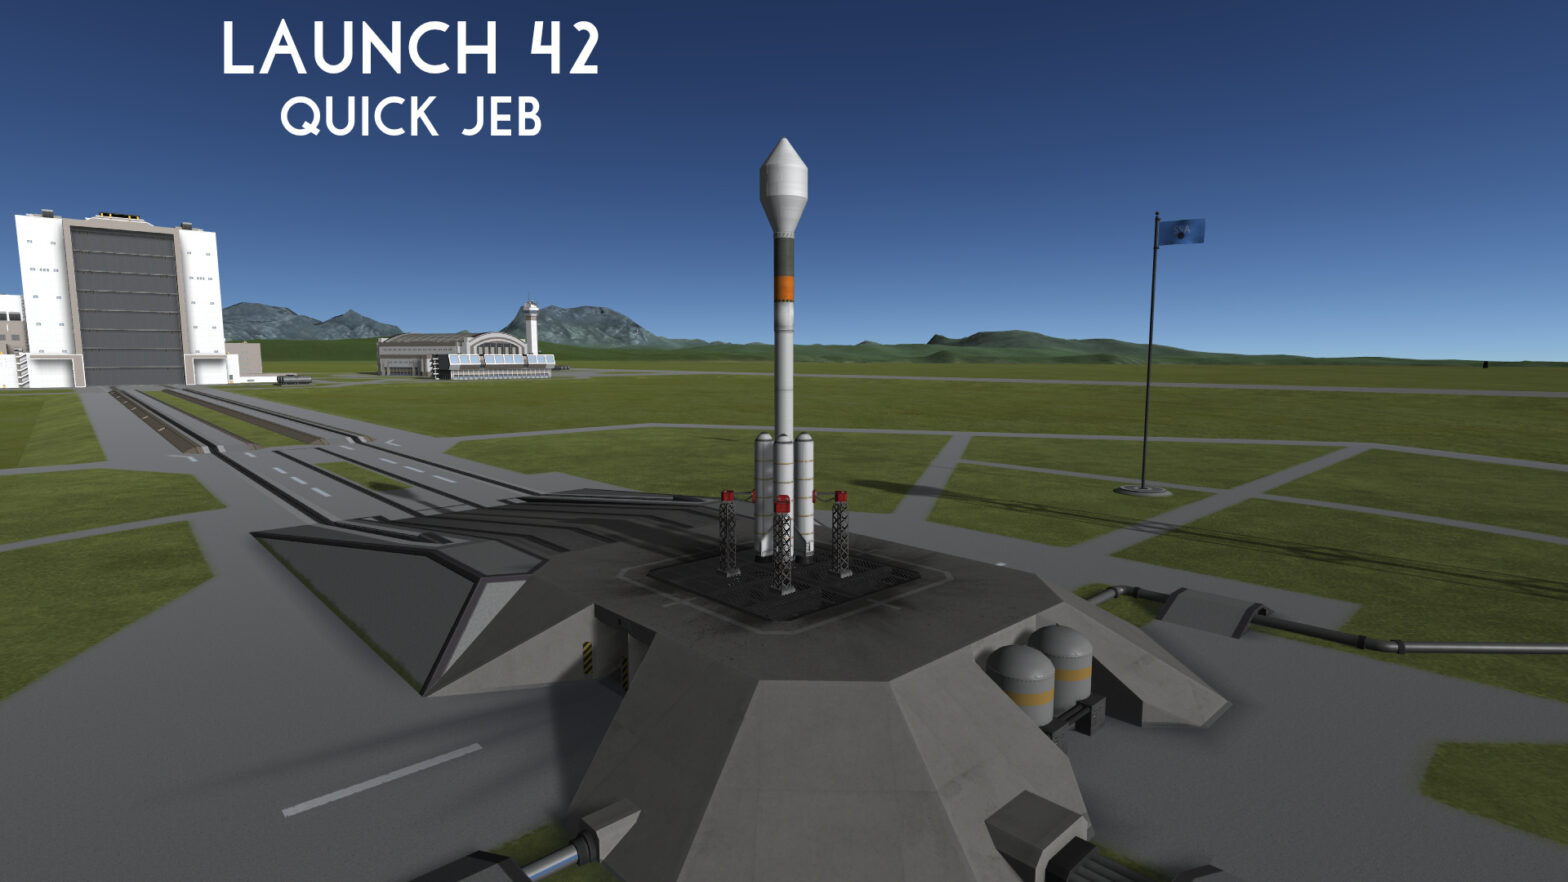 Launch 42 – Quick Jeb